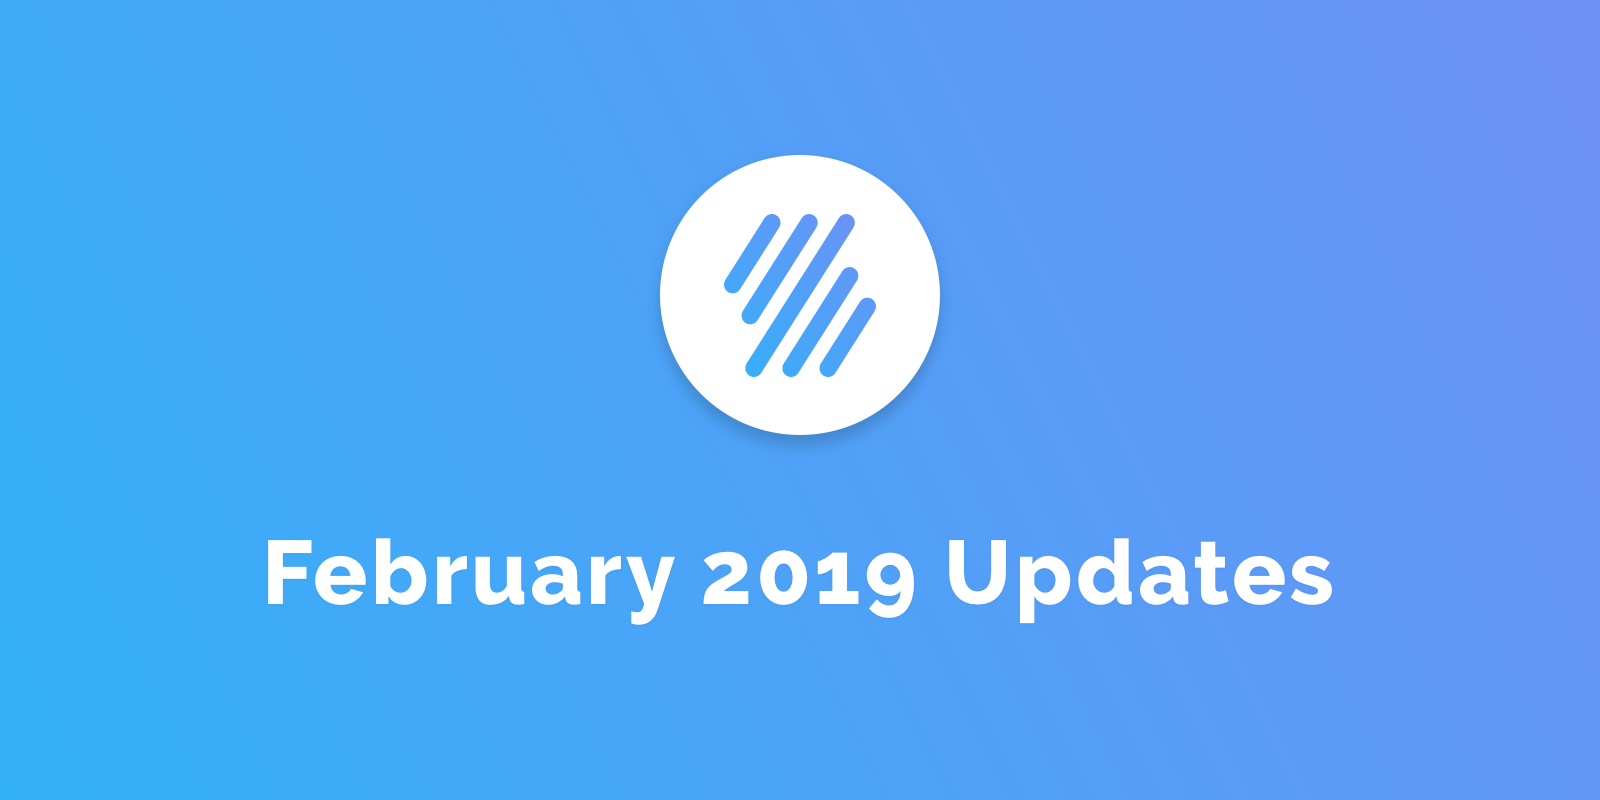 February 2019 Updates